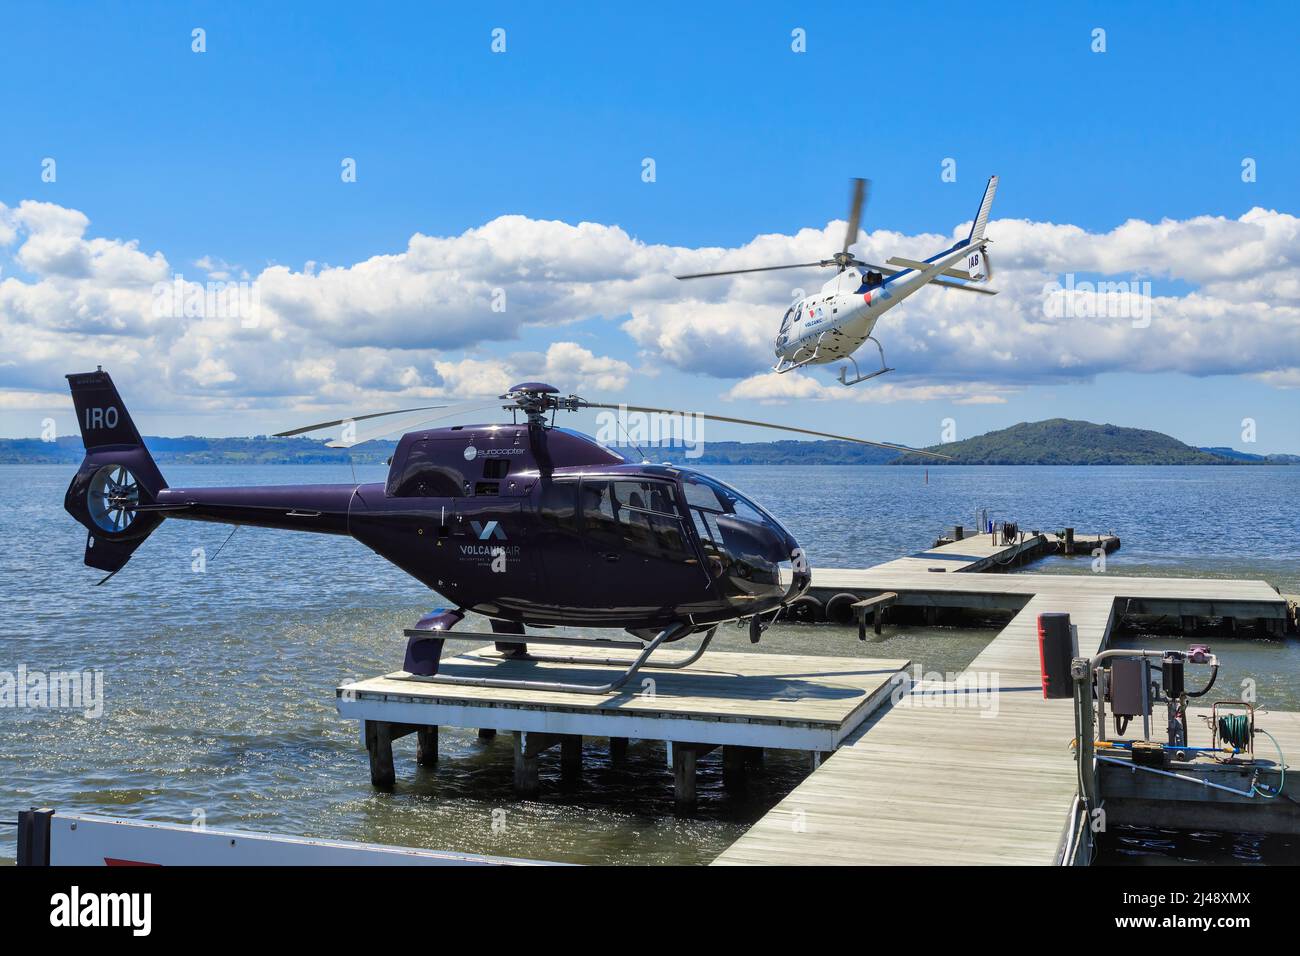 Helicopters of Volcanic Air (a tour company) at Lake Rotorua, Rotorua, New Zealand Stock Photo